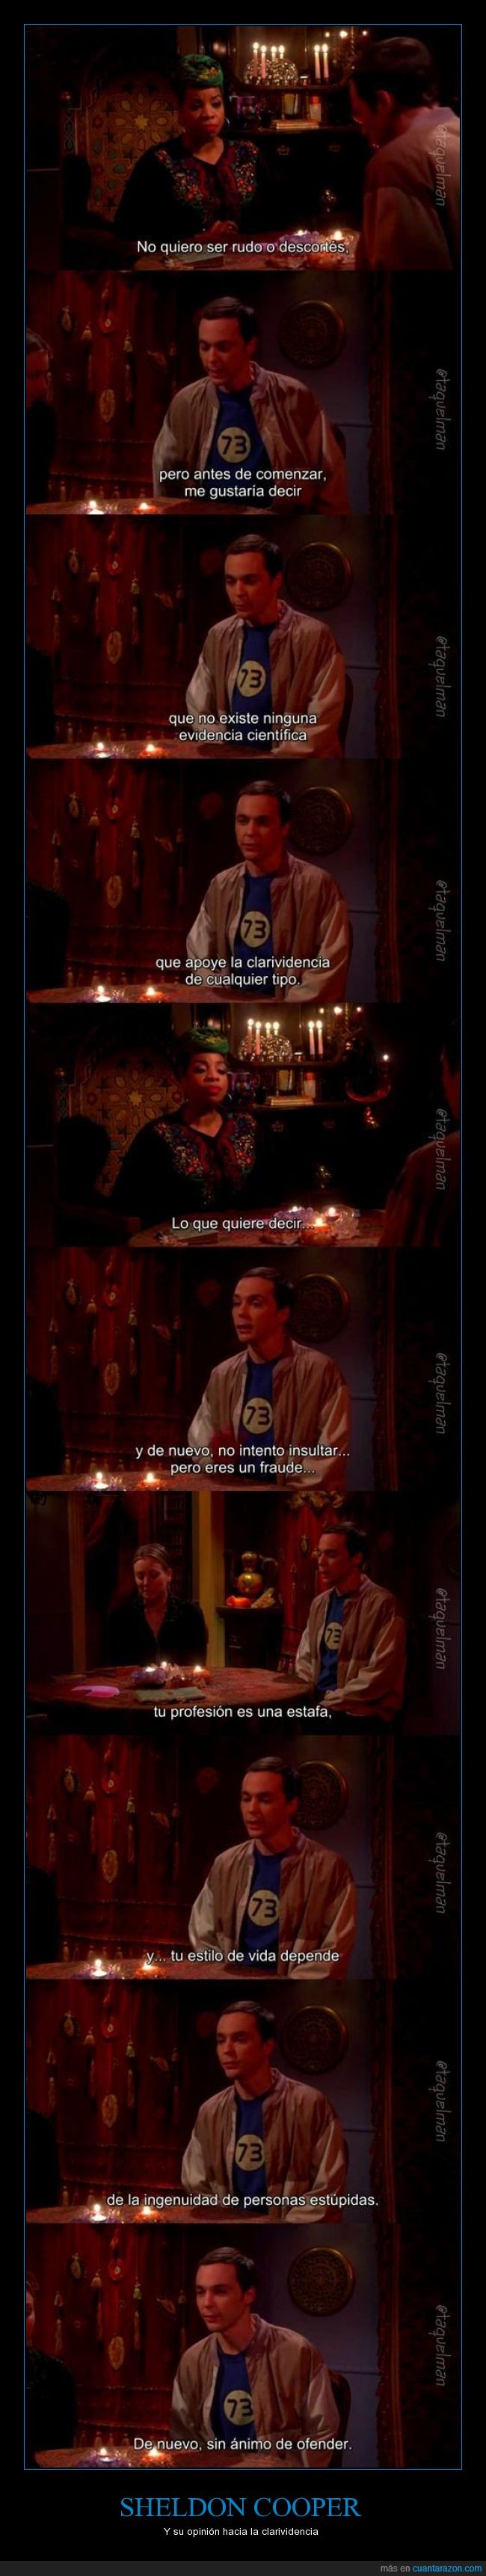 sarcasmo,clarividencia,the big bang theory,Sheldon Cooper,creer,incredulo